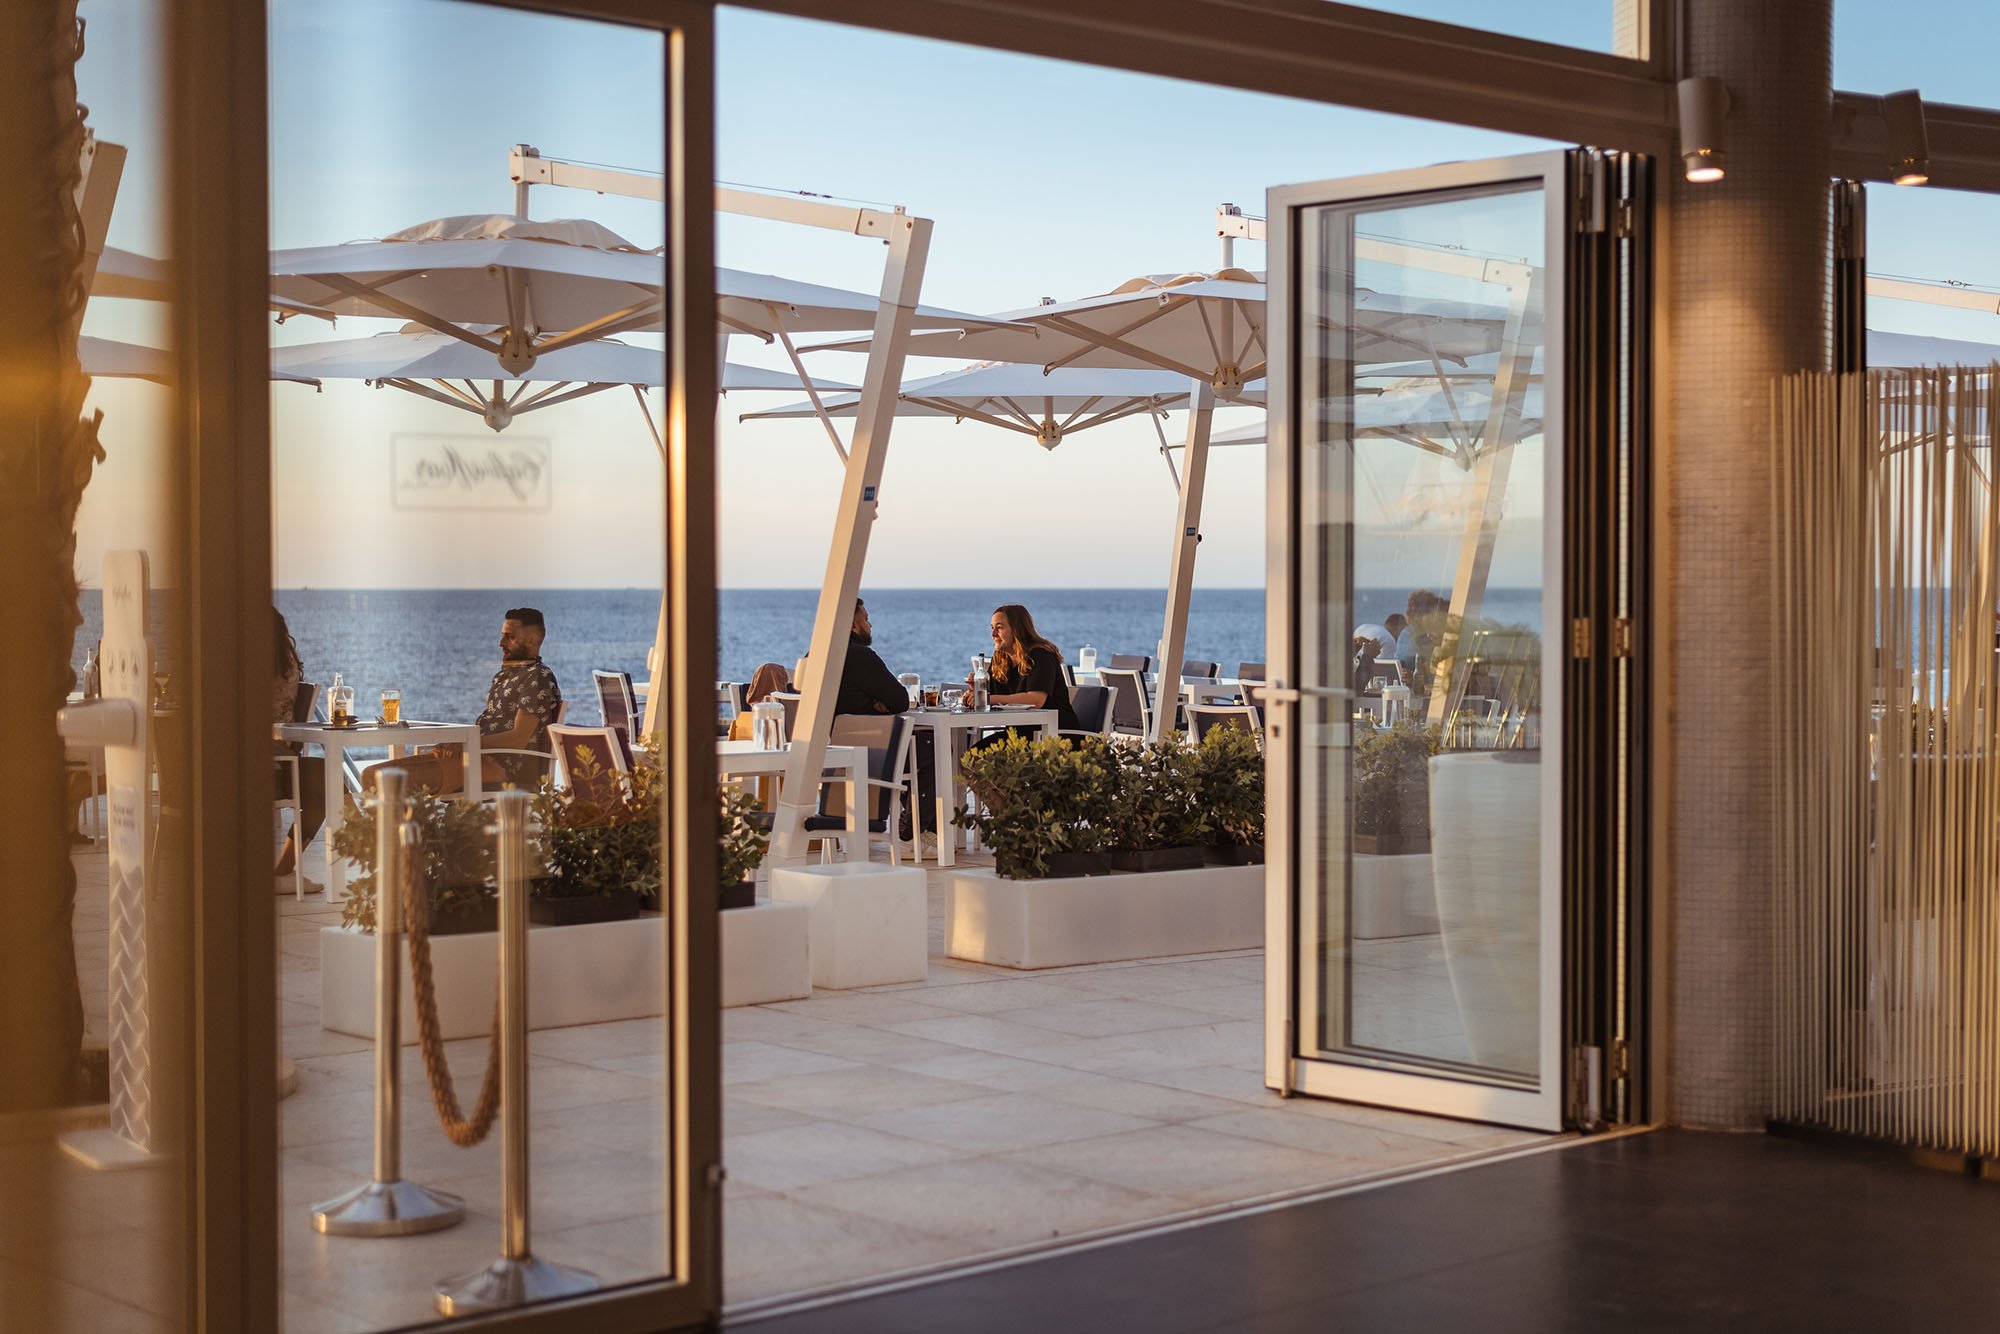 Cafe del Mar Malta - Malta restaurants with a view